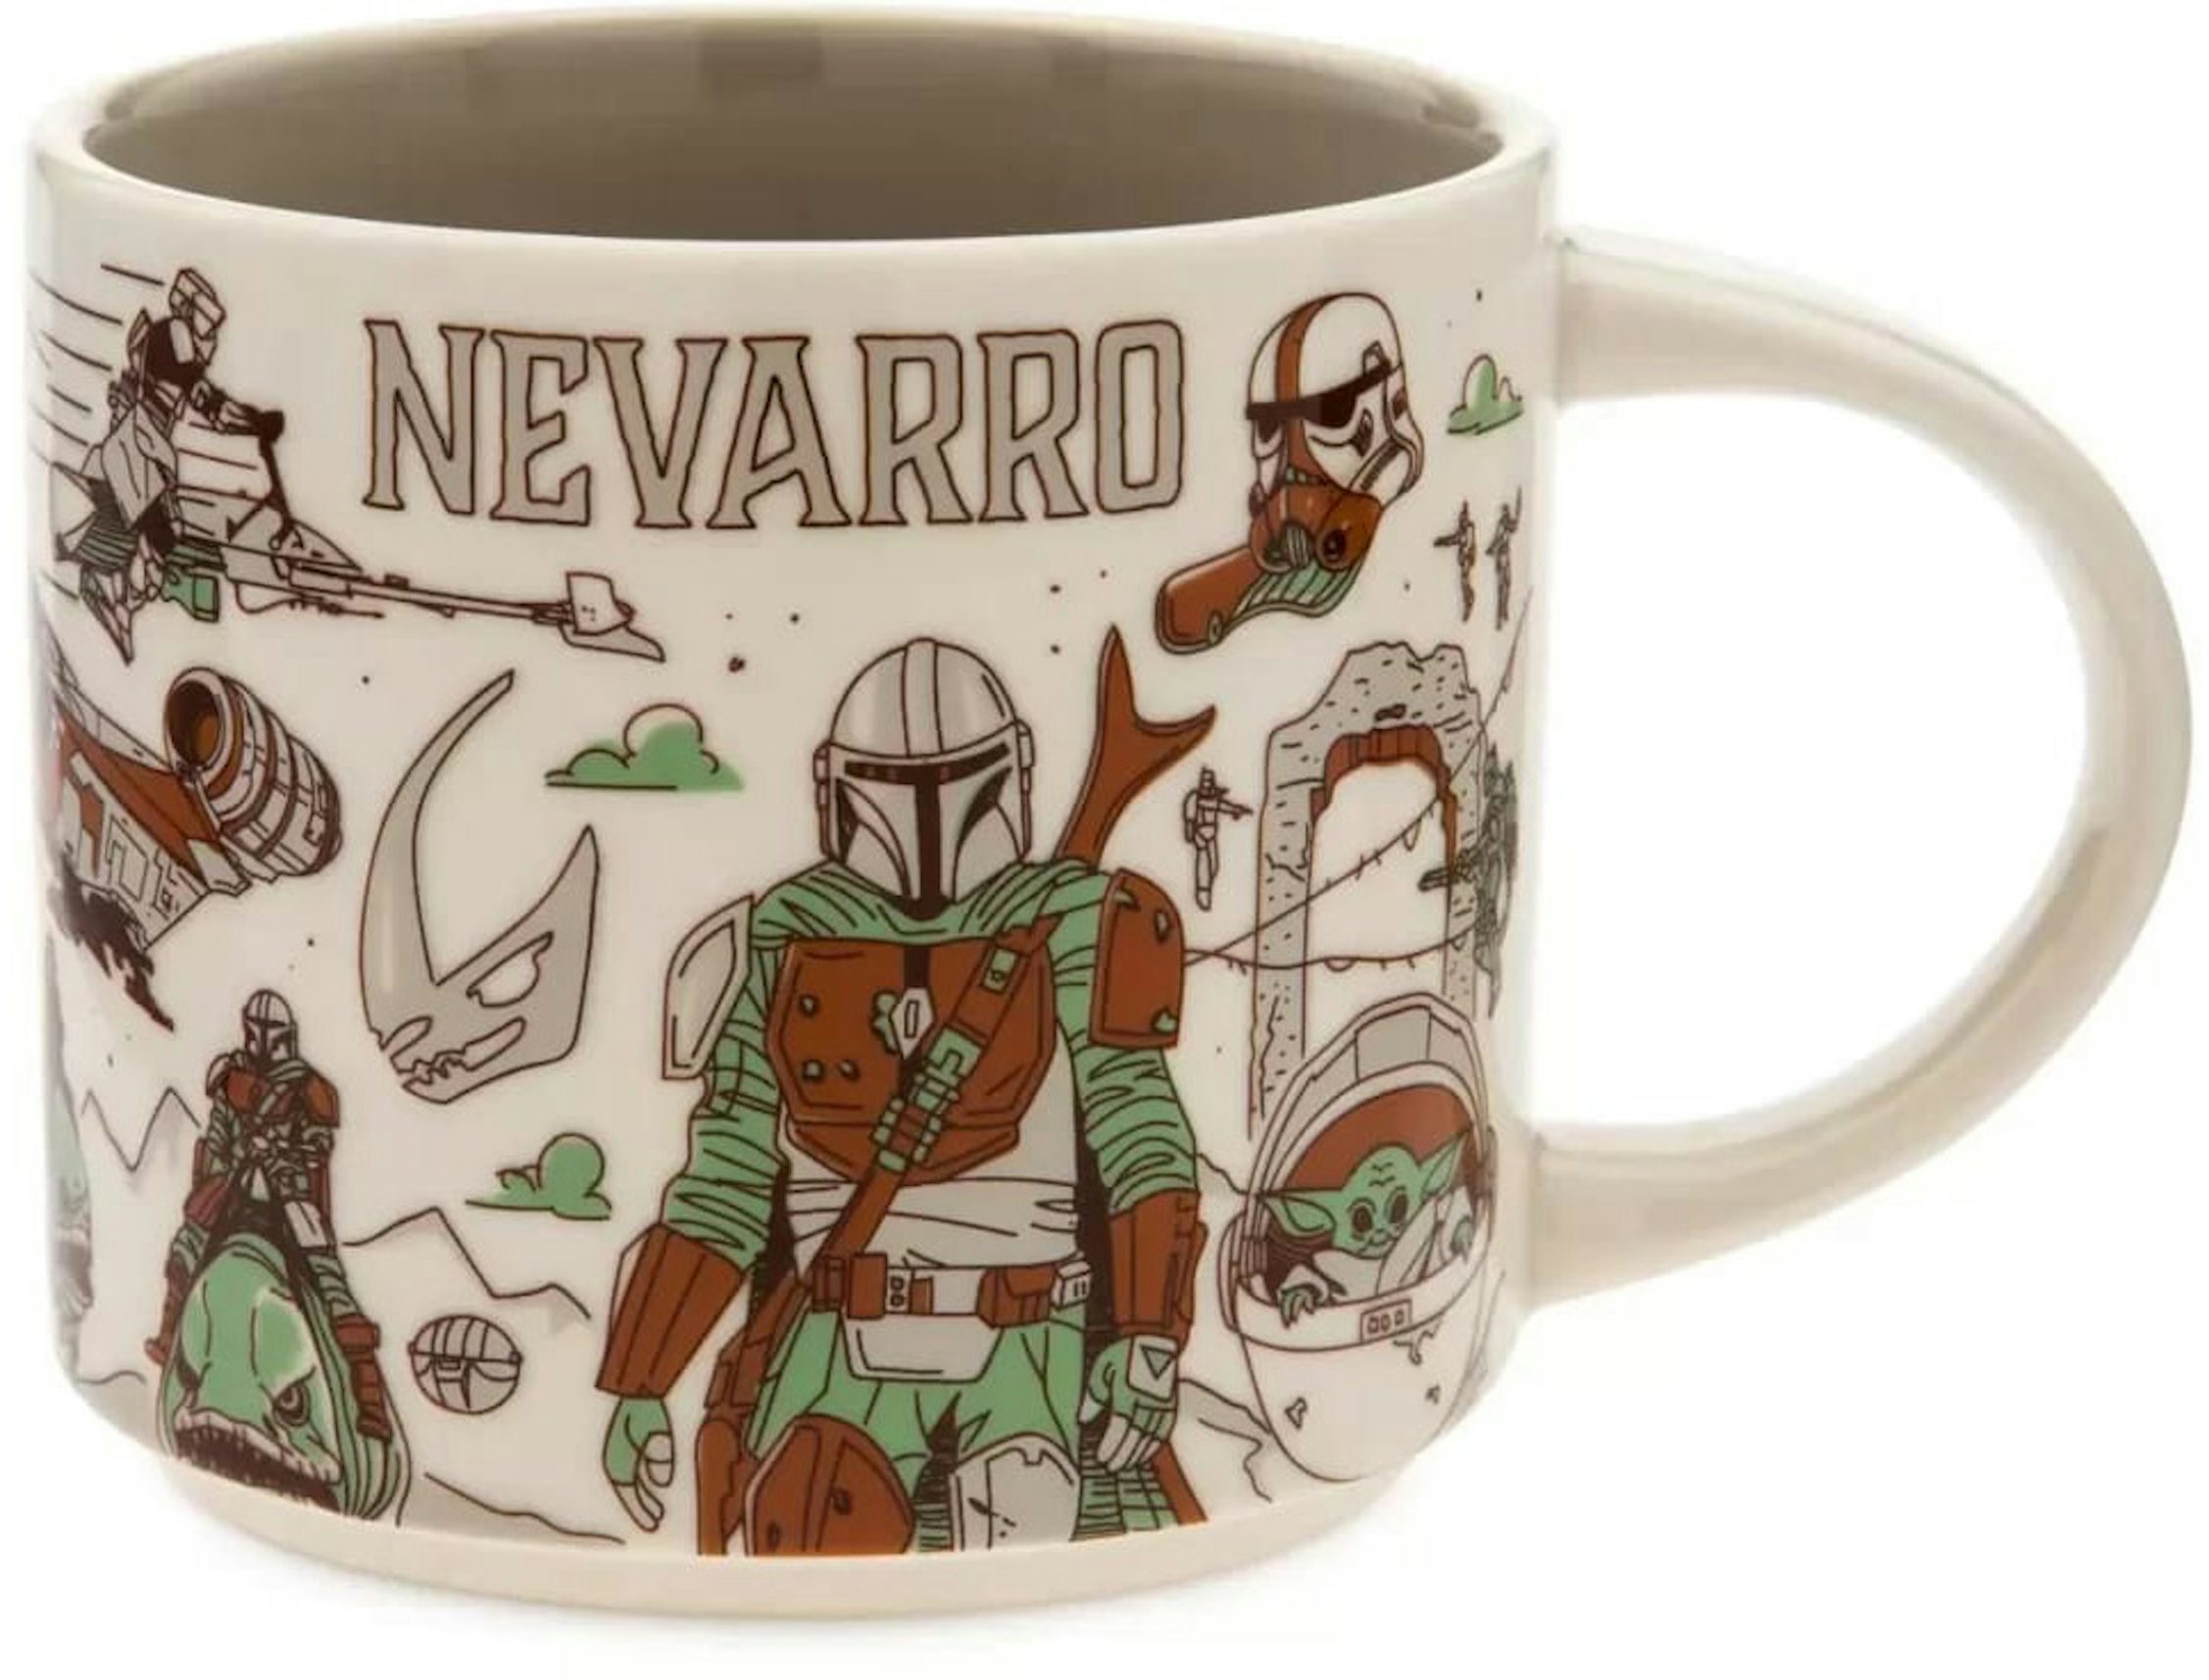 https://images.stockx.com/images/Starbucks-Star-Wars-Collection-Nevarro-Mug.jpg?fit=fill&bg=FFFFFF&w=1200&h=857&fm=jpg&auto=compress&dpr=2&trim=color&updated_at=1654191664&q=60